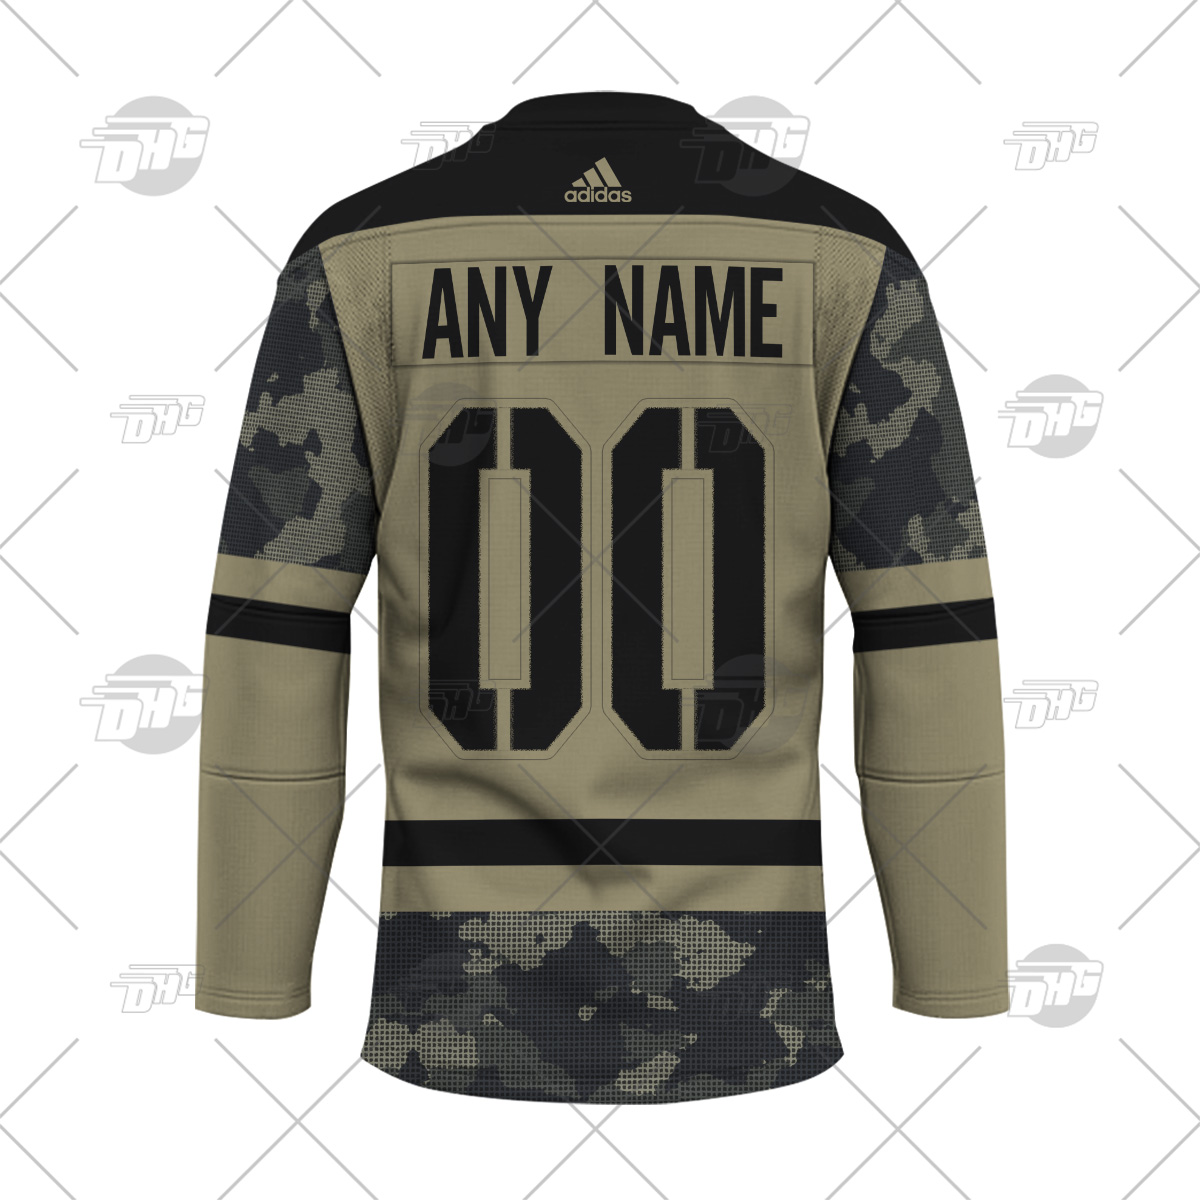 These Military Appreciation jerseys are 🔥 - Colorado Avalanche